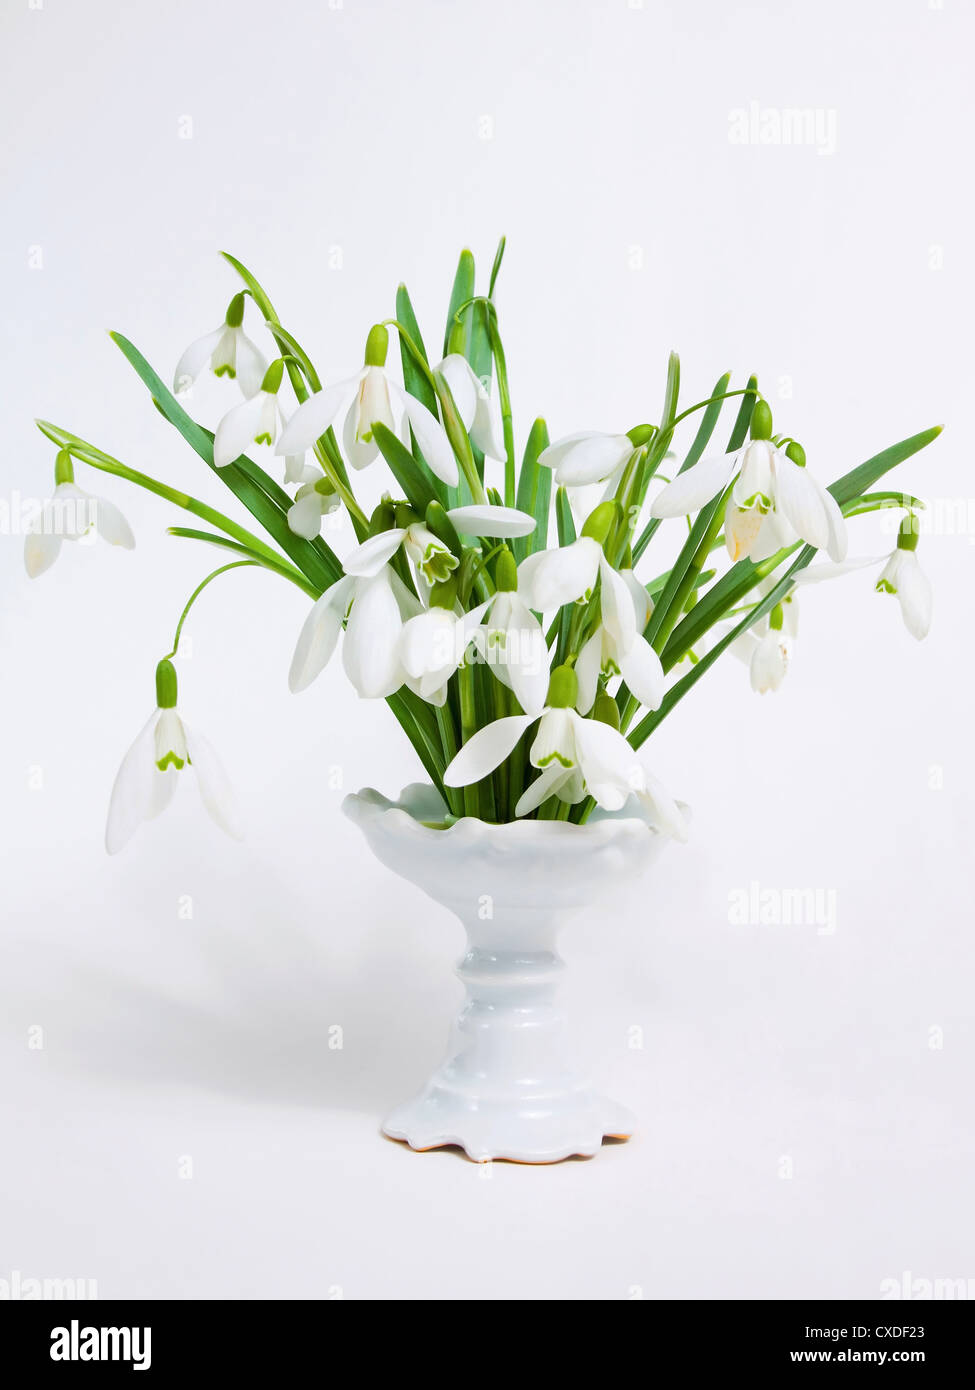 Snowdrops in a vase Stock Photo